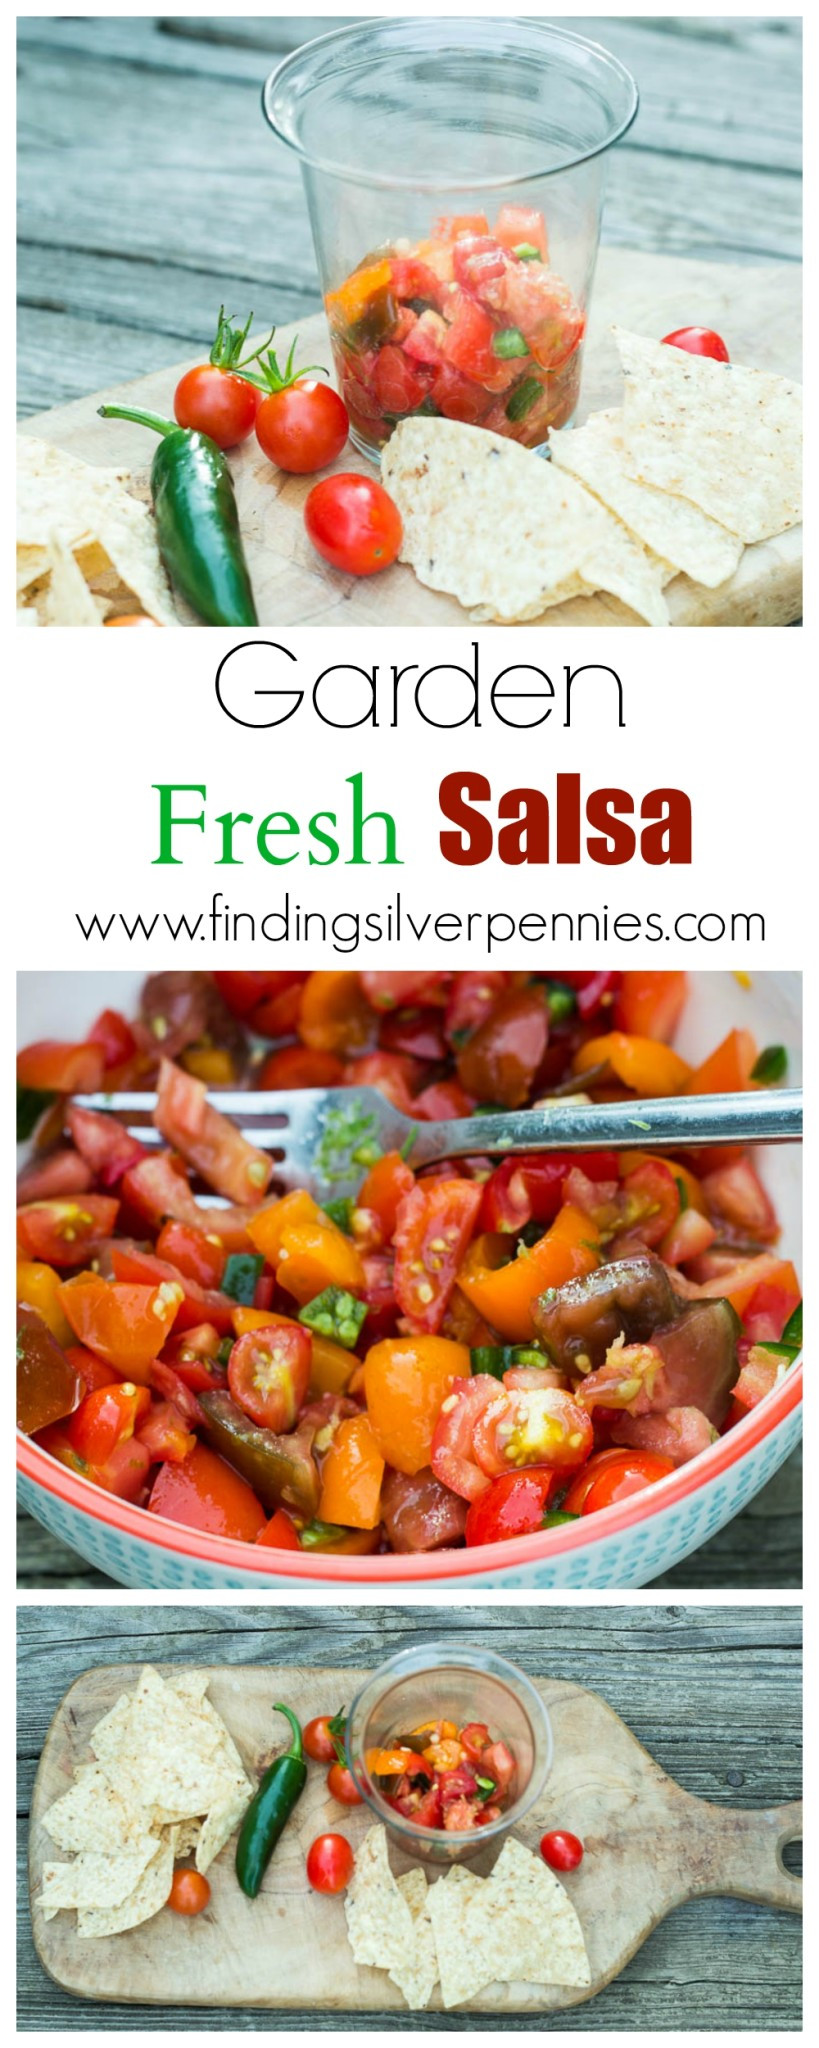 Garden Fresh Salsa Recipe
 Garden Fresh Salsa Finding Silver Pennies